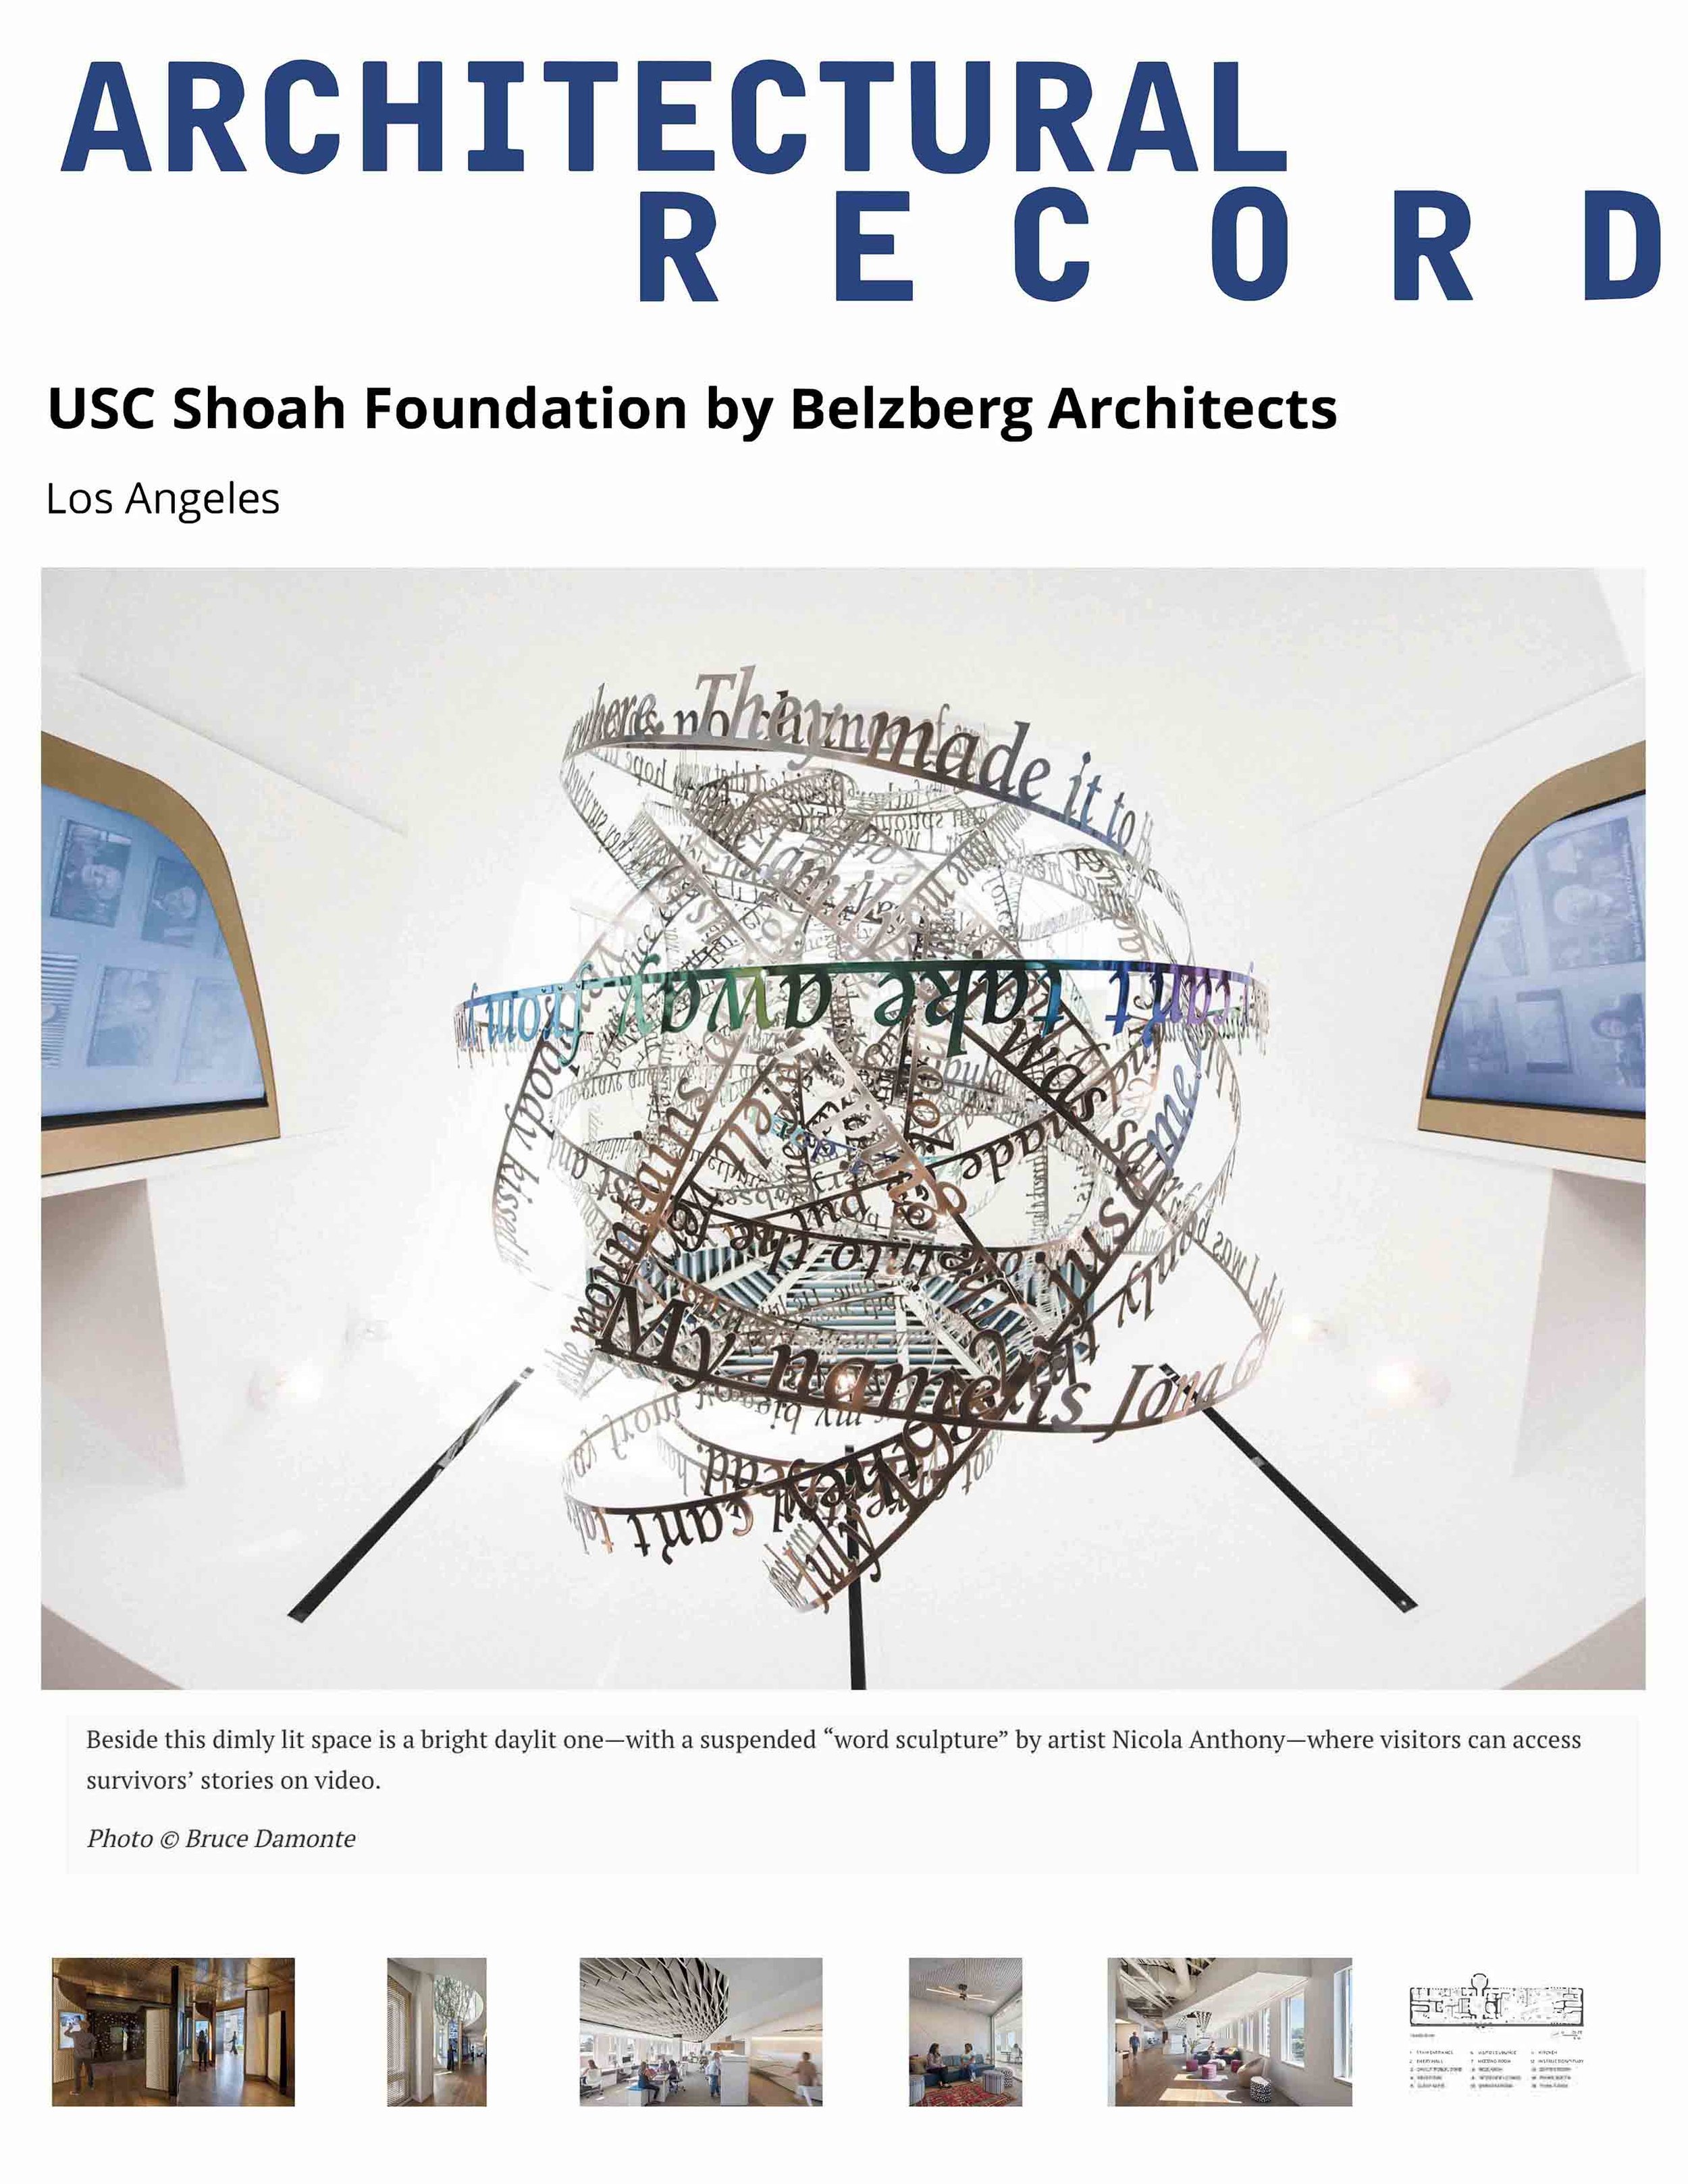 2019.03.07 Architectural Record_Nicola Anthony_USC Shoah Foundation